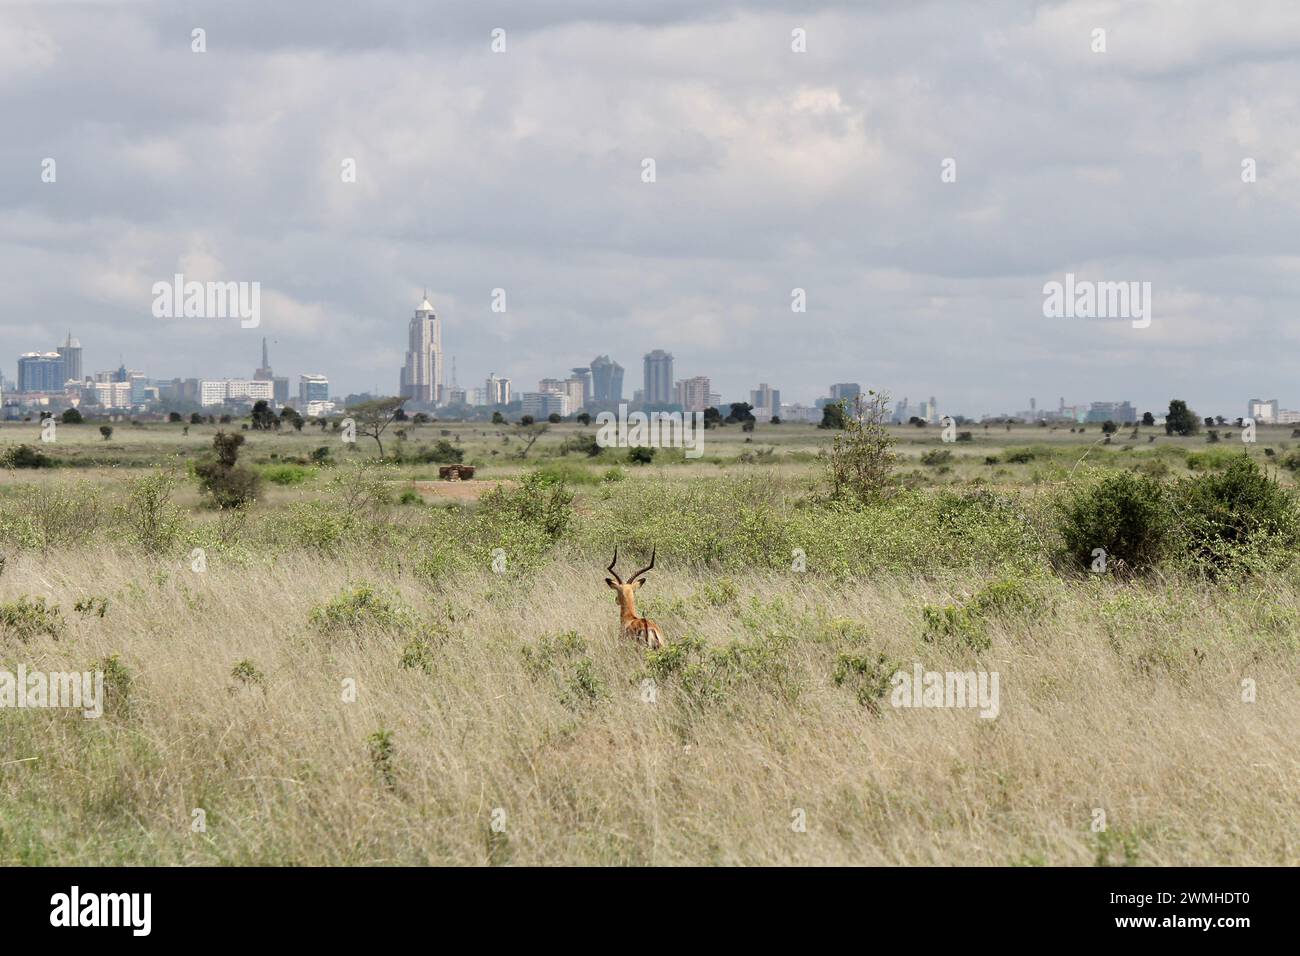 Impala (medium sized antelope) with the city of Nairobi in the background Stock Photo